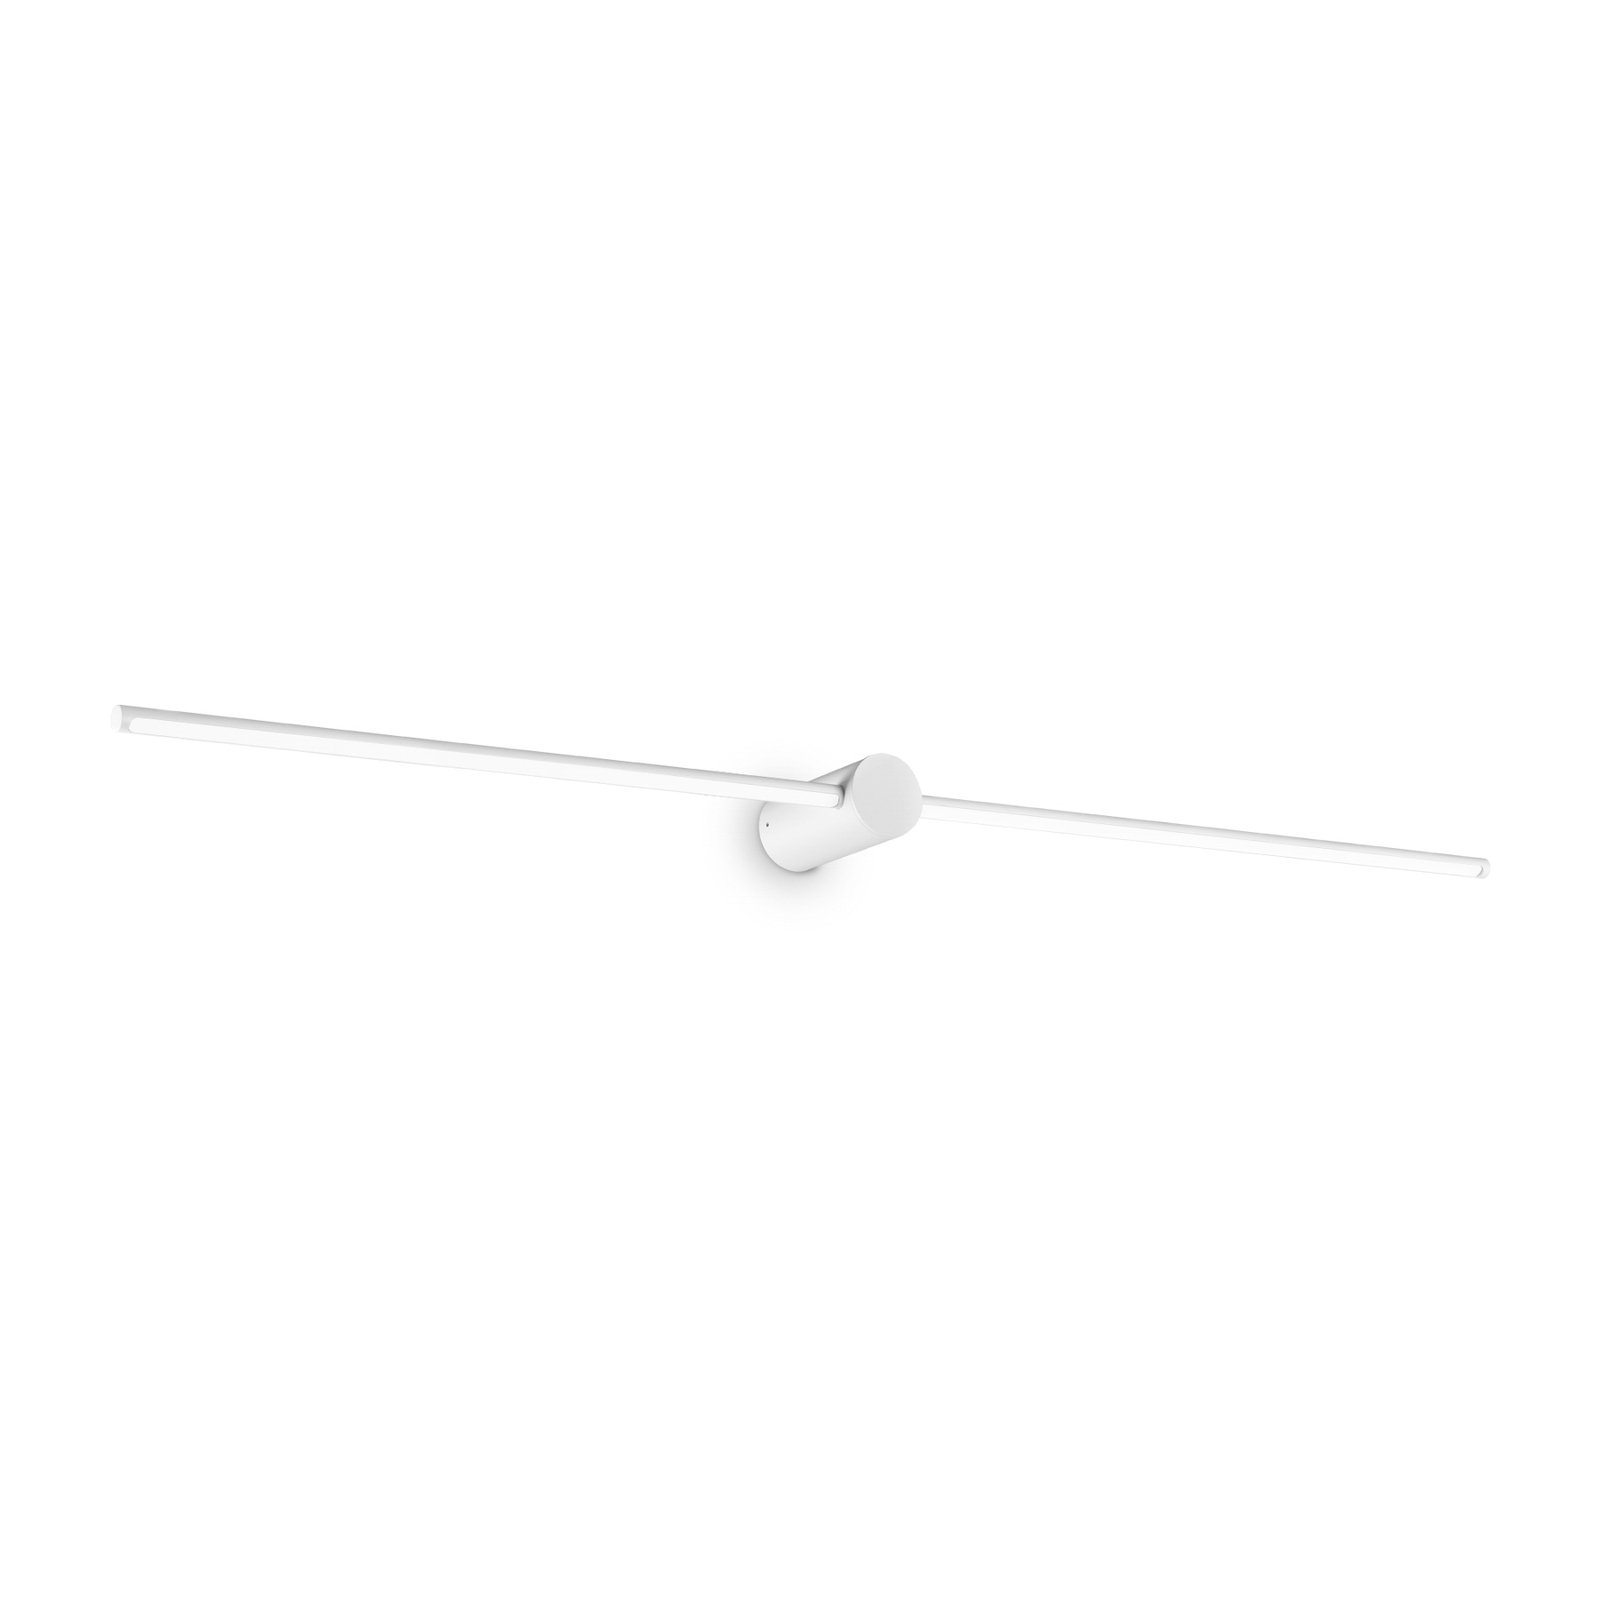 Ideal Lux badkamer wandlamp Filo wit, breedte 115 cm, metaal